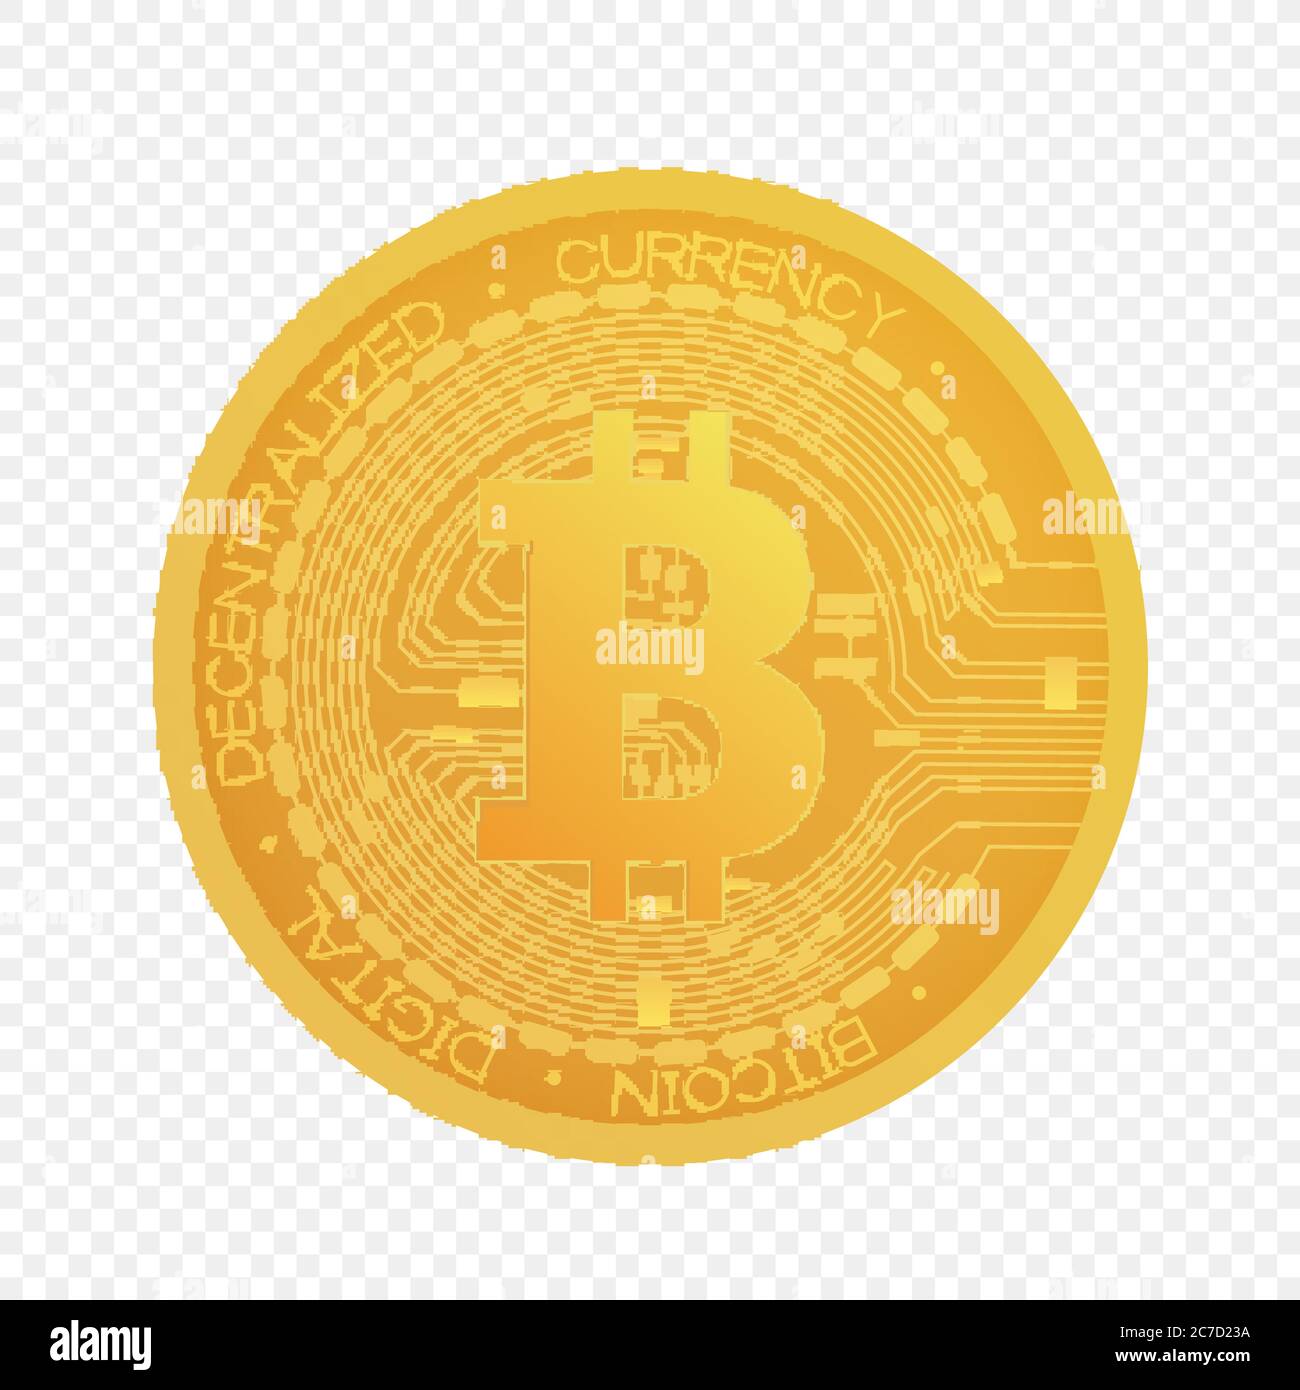 Cartoon vector golden bitcoin coin isolated on alpha transperant background Stock Vector